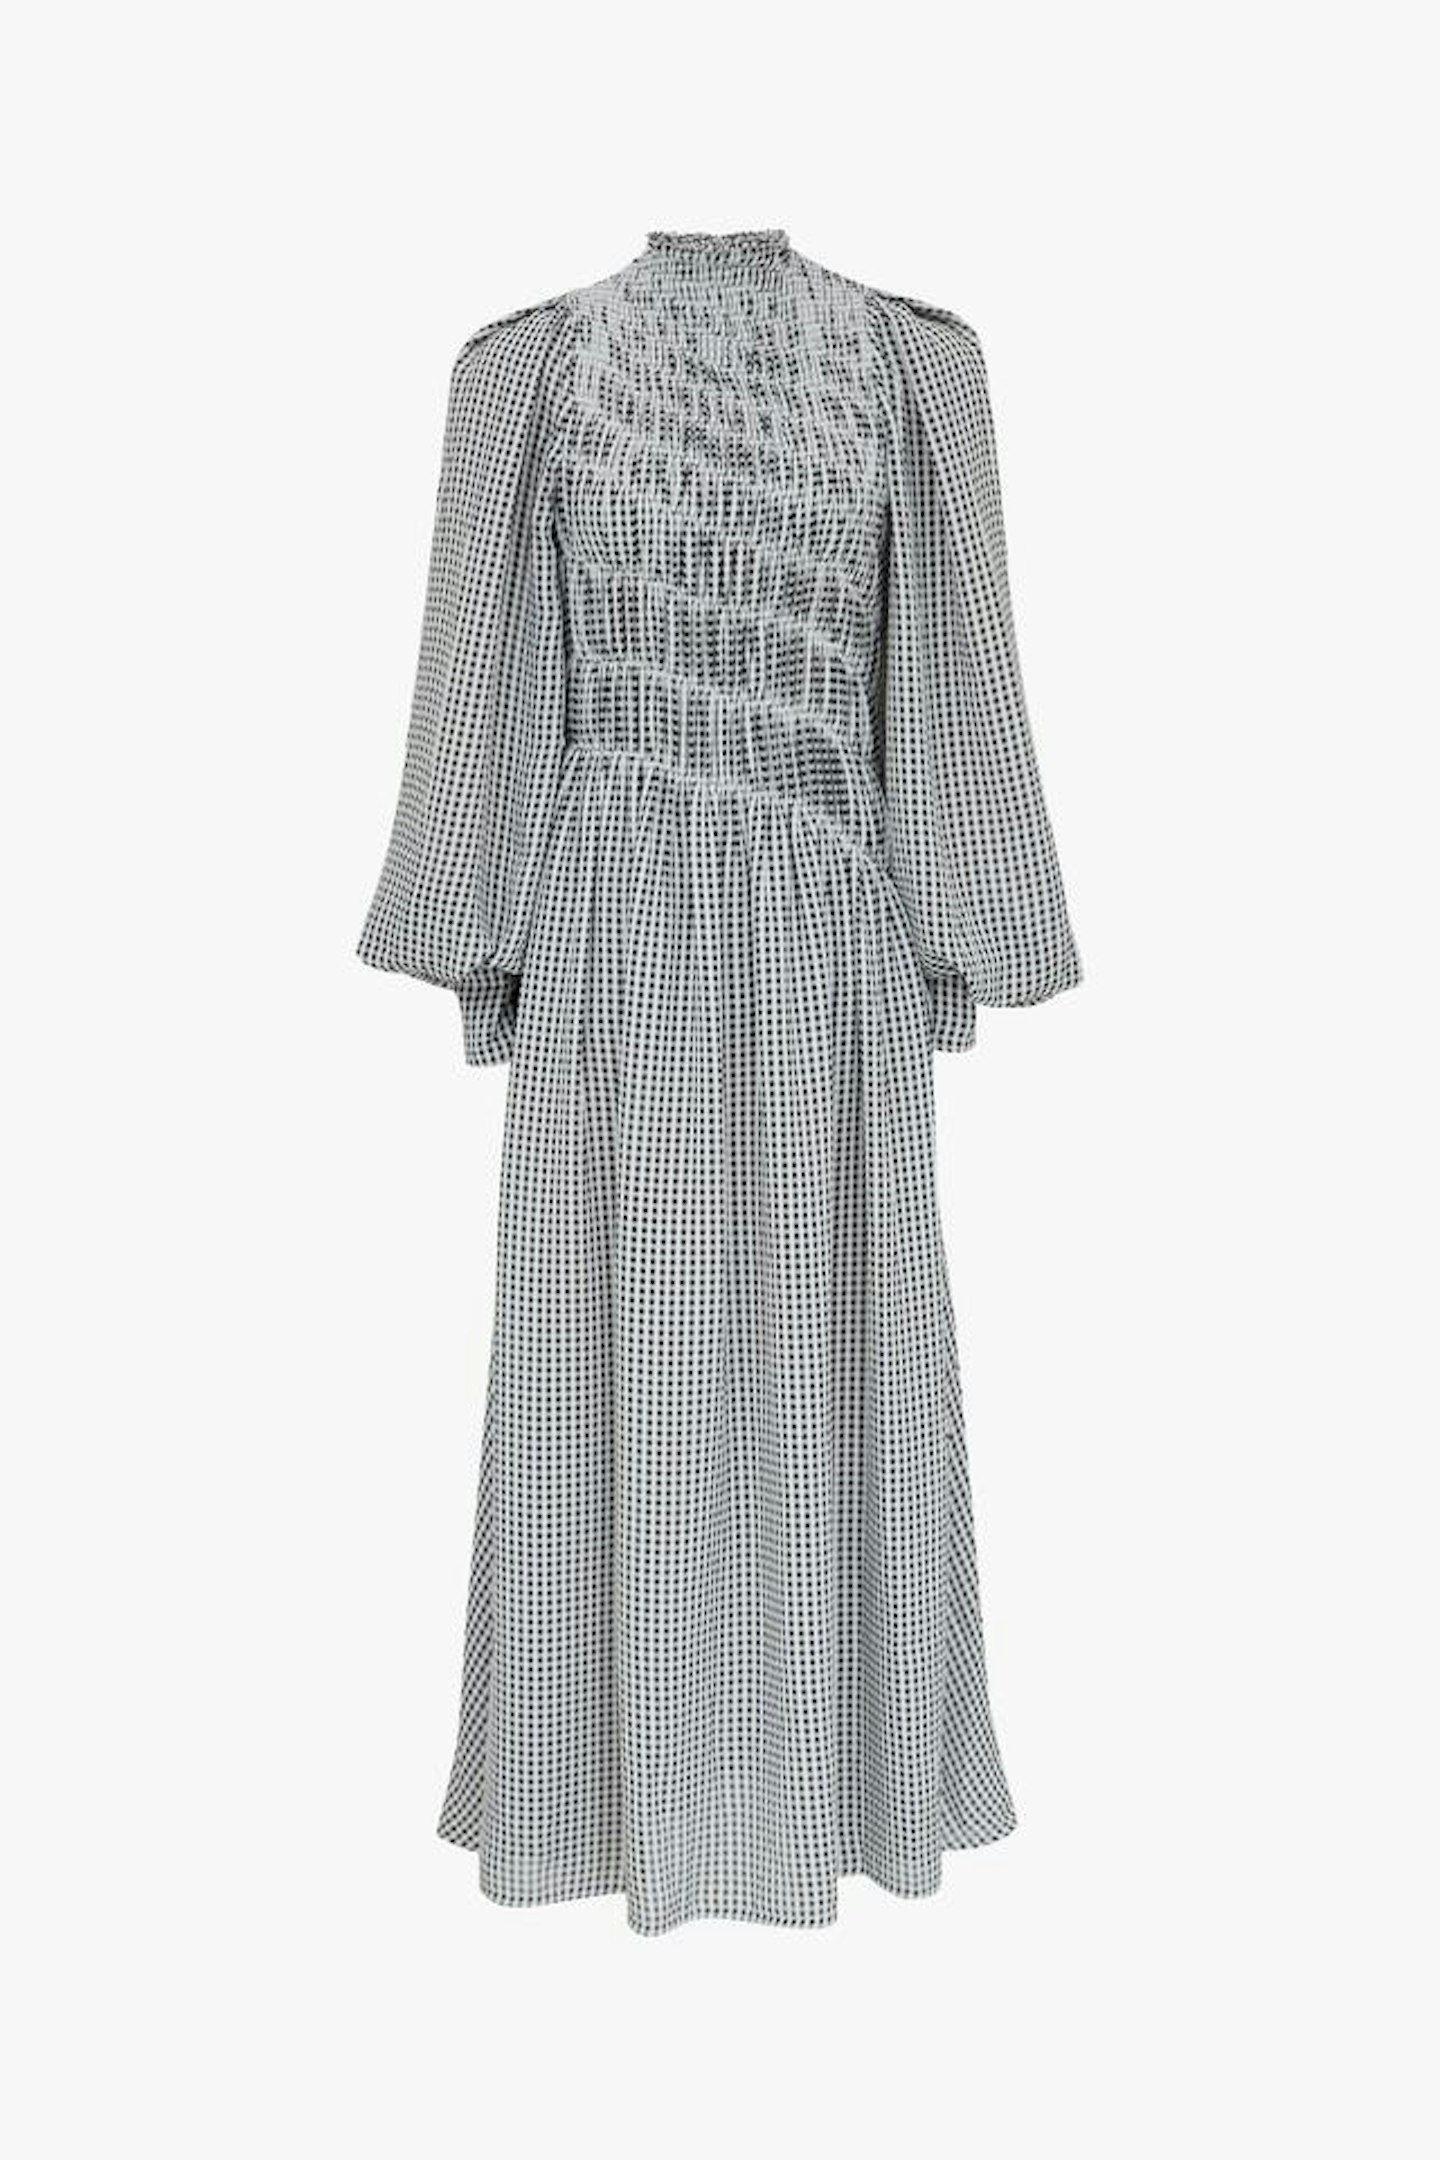 Victoria Beckham, Long Sleeve Smocked Midi Dress In Black And White, £516